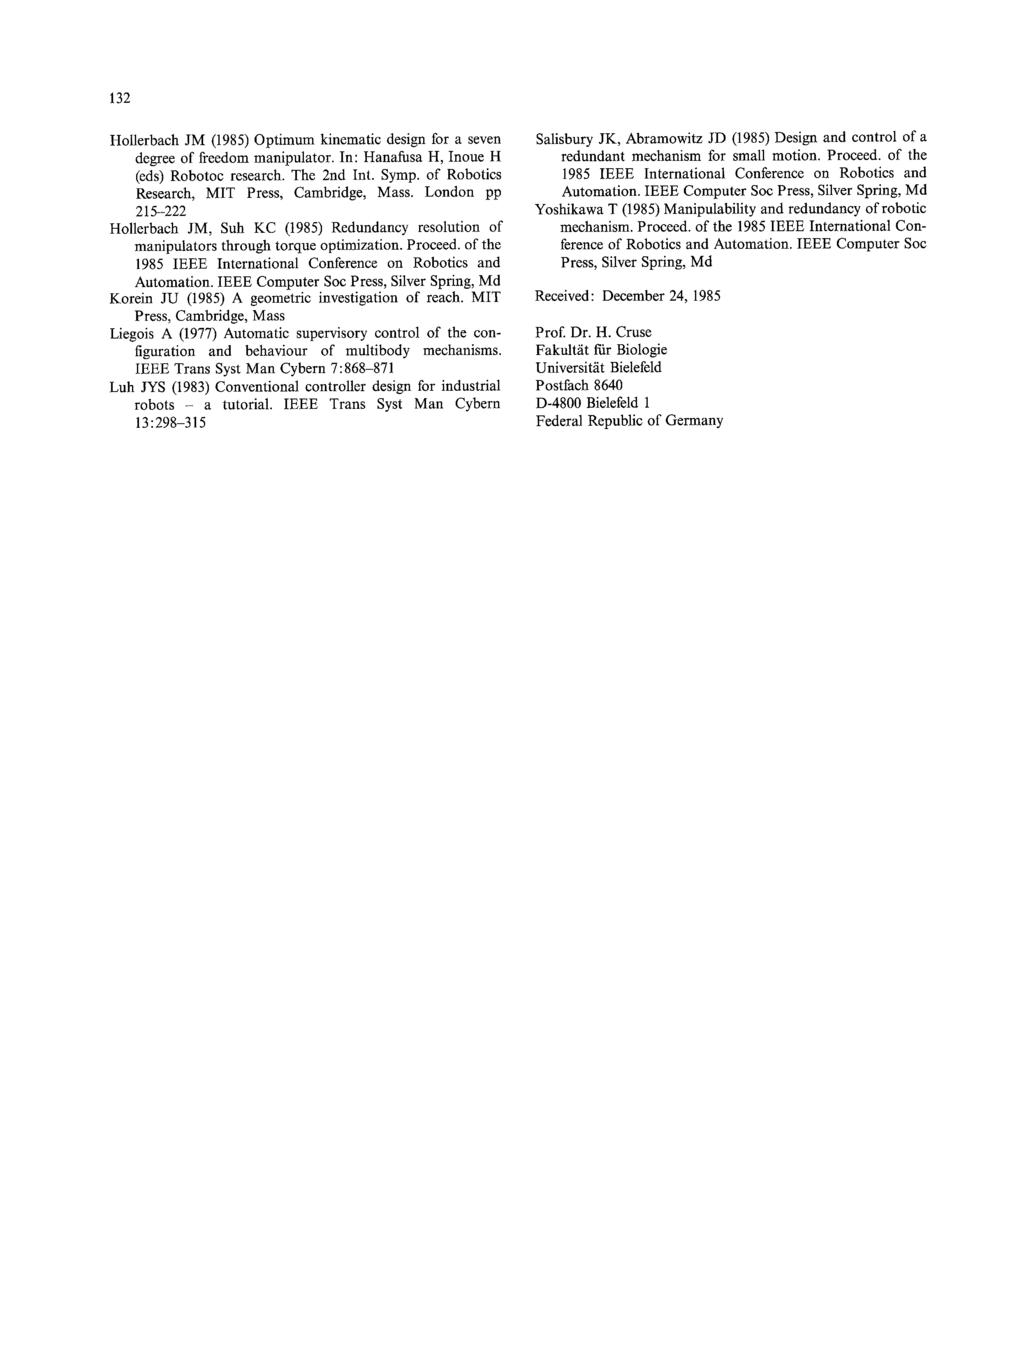 132 Hllerbach JM (1985) Optimum kinematic design fr a seven degree f freedm manipulatr. In: Hanafusa H, Inue H (eds) Rbtc research. The 2nd Int. Symp. f Rbtics Research, MIT Press, Cambridge, Mass.